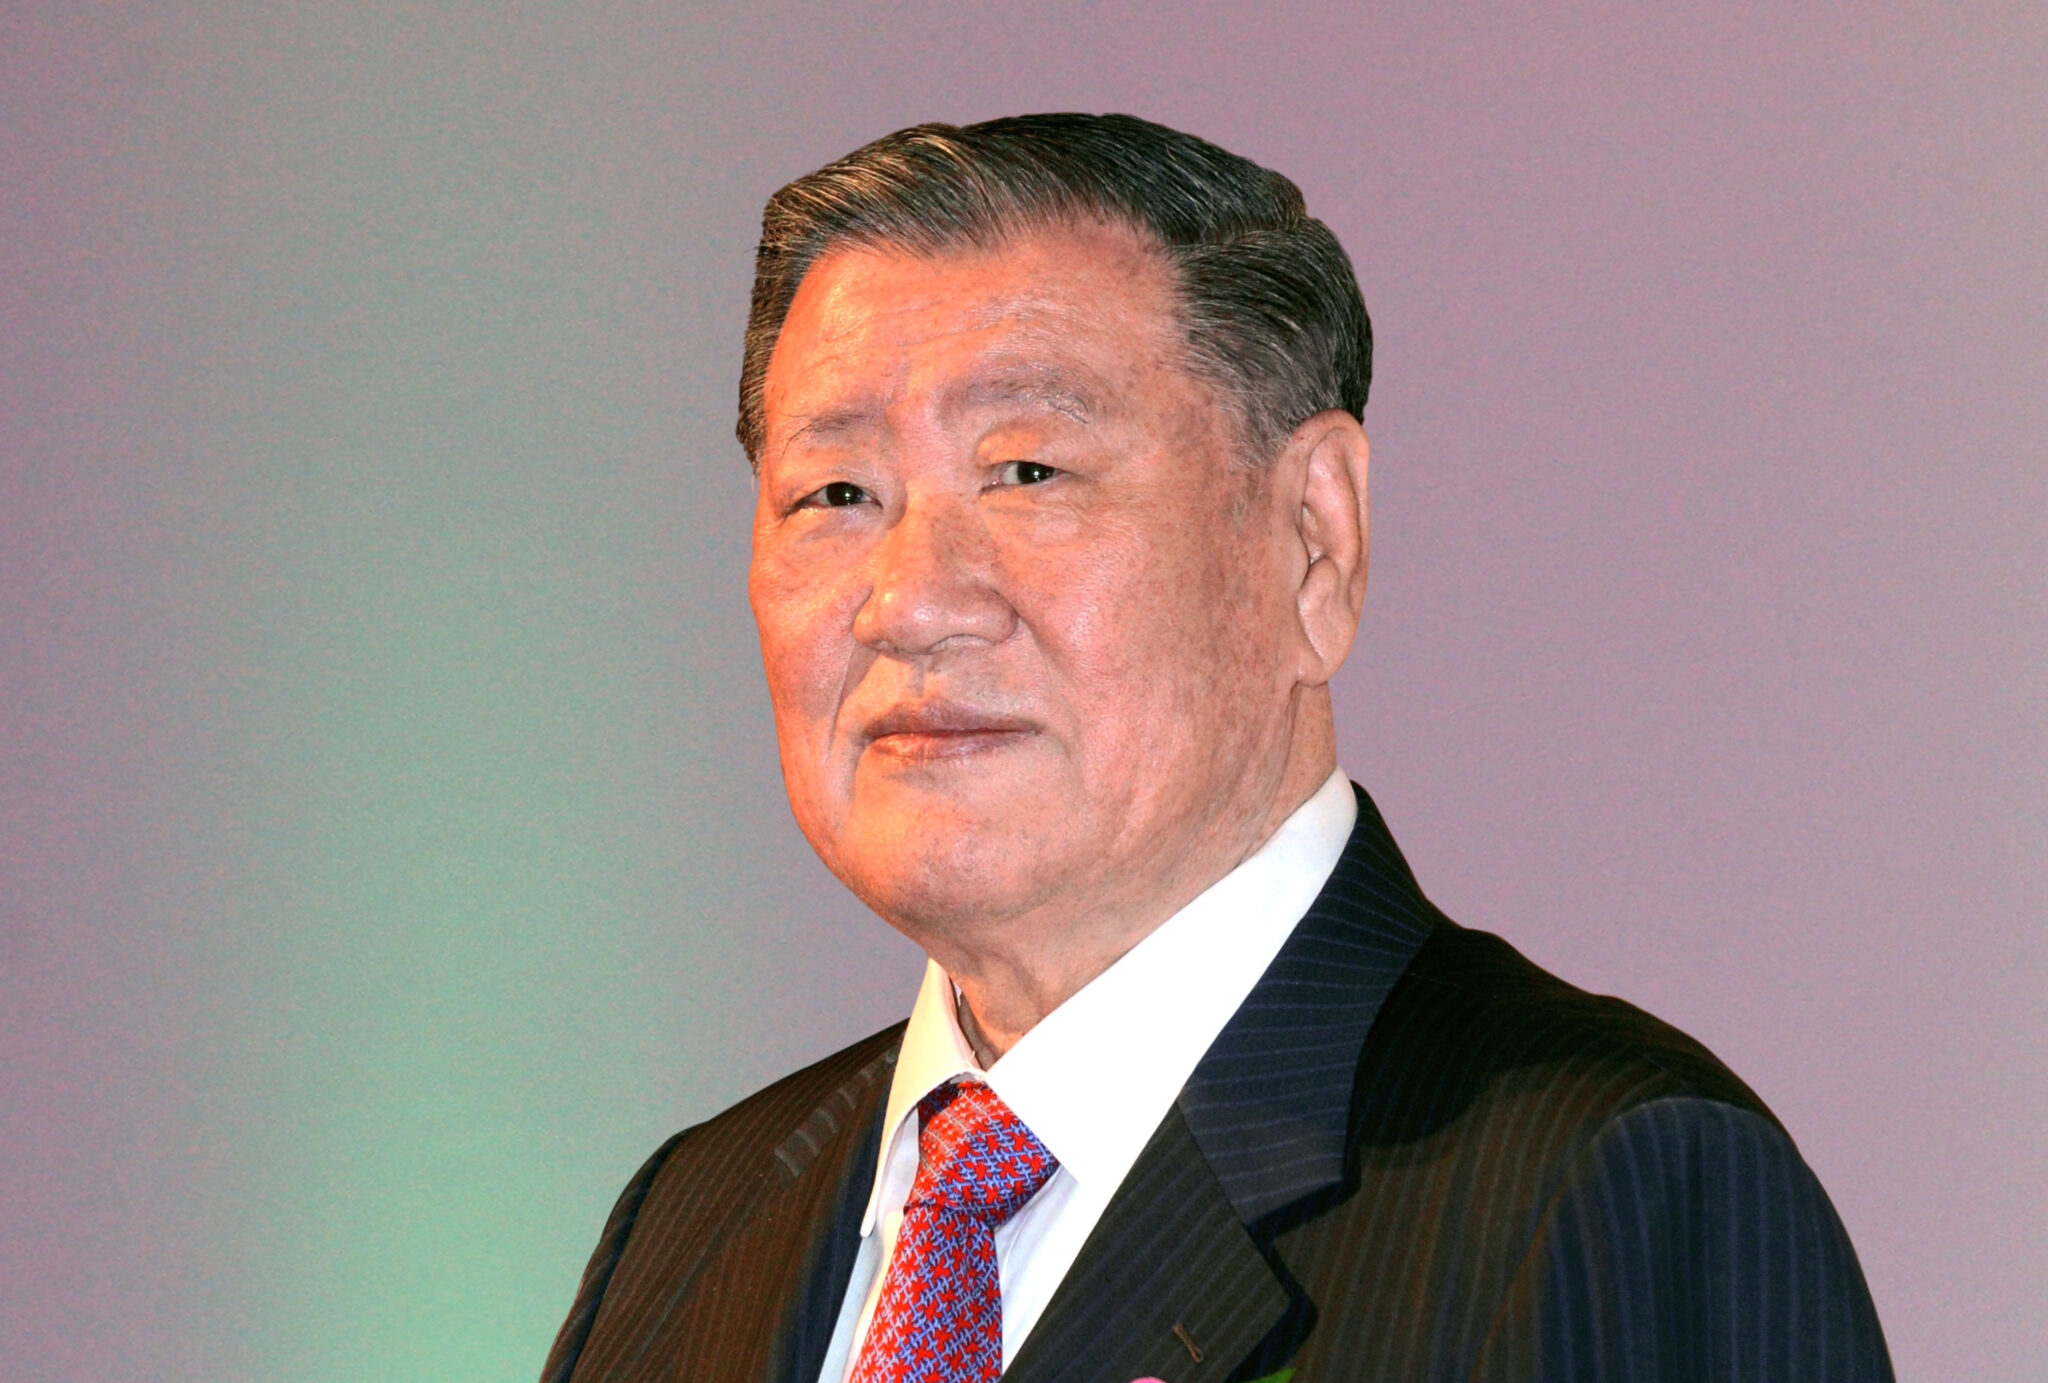 Honorary Chairman Mong-Koo Chung